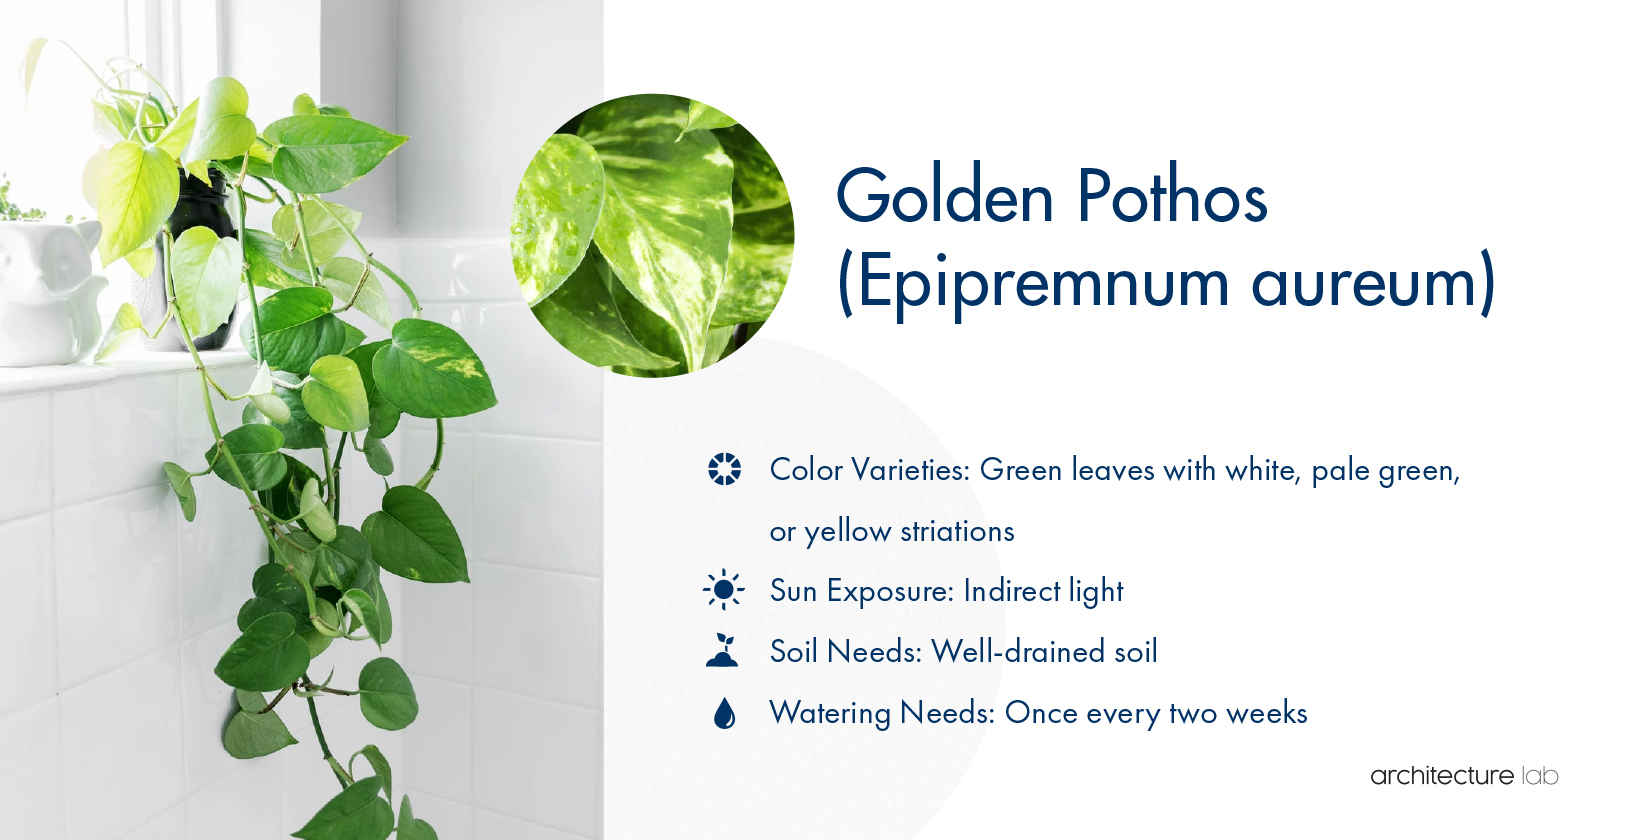 3. Golden pothos (epipremnum aureum)